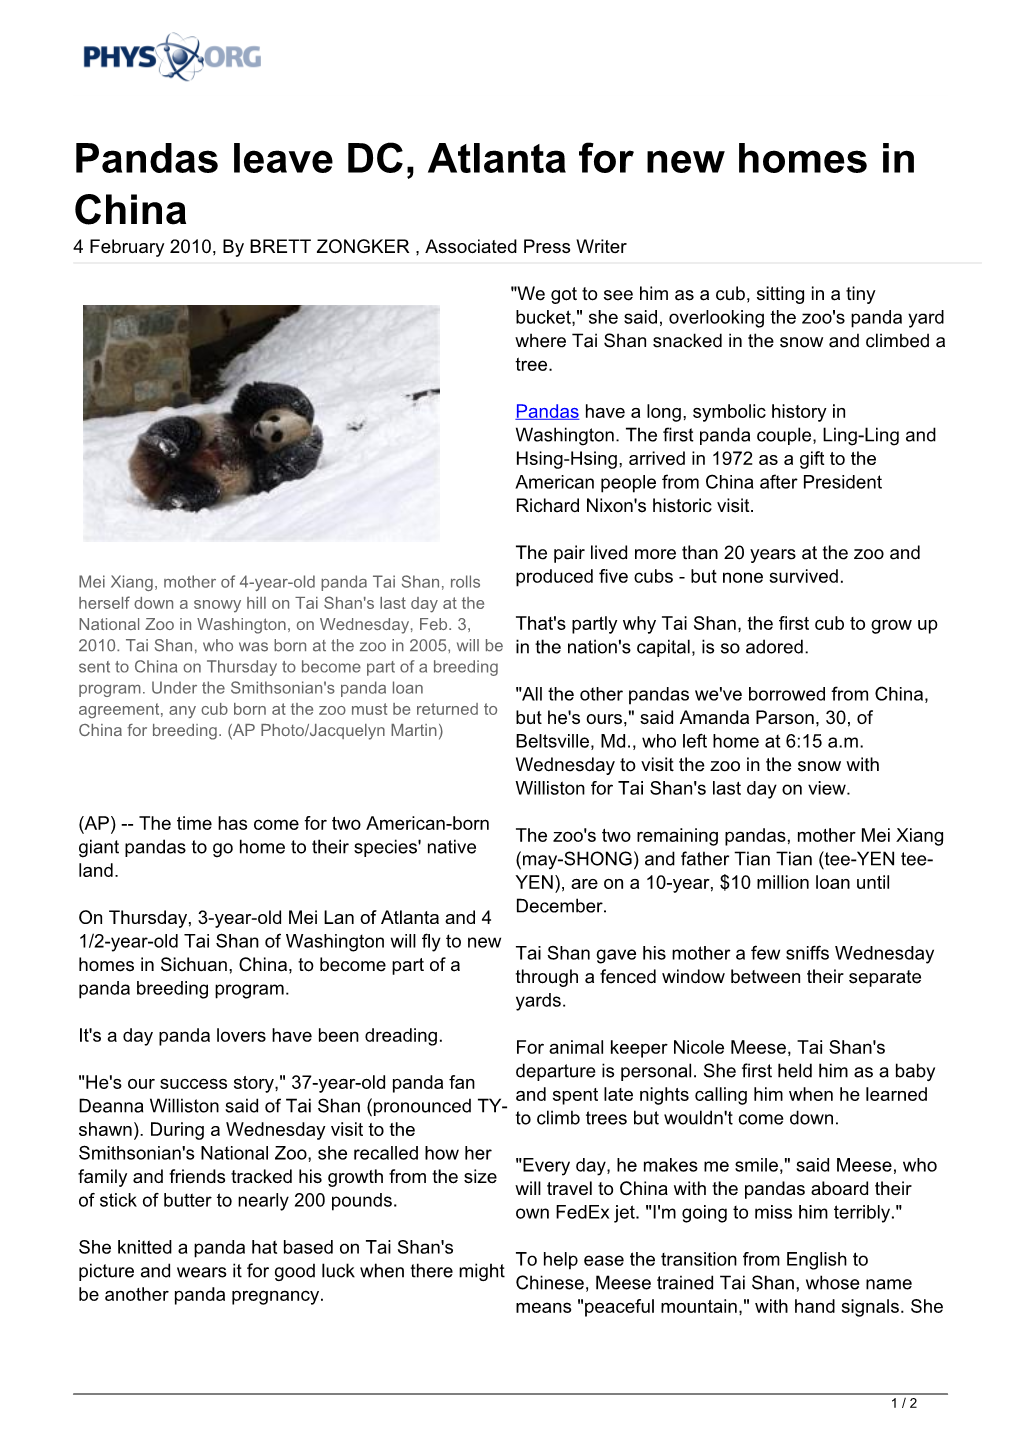 Pandas Leave DC, Atlanta for New Homes in China 4 February 2010, by BRETT ZONGKER , Associated Press Writer